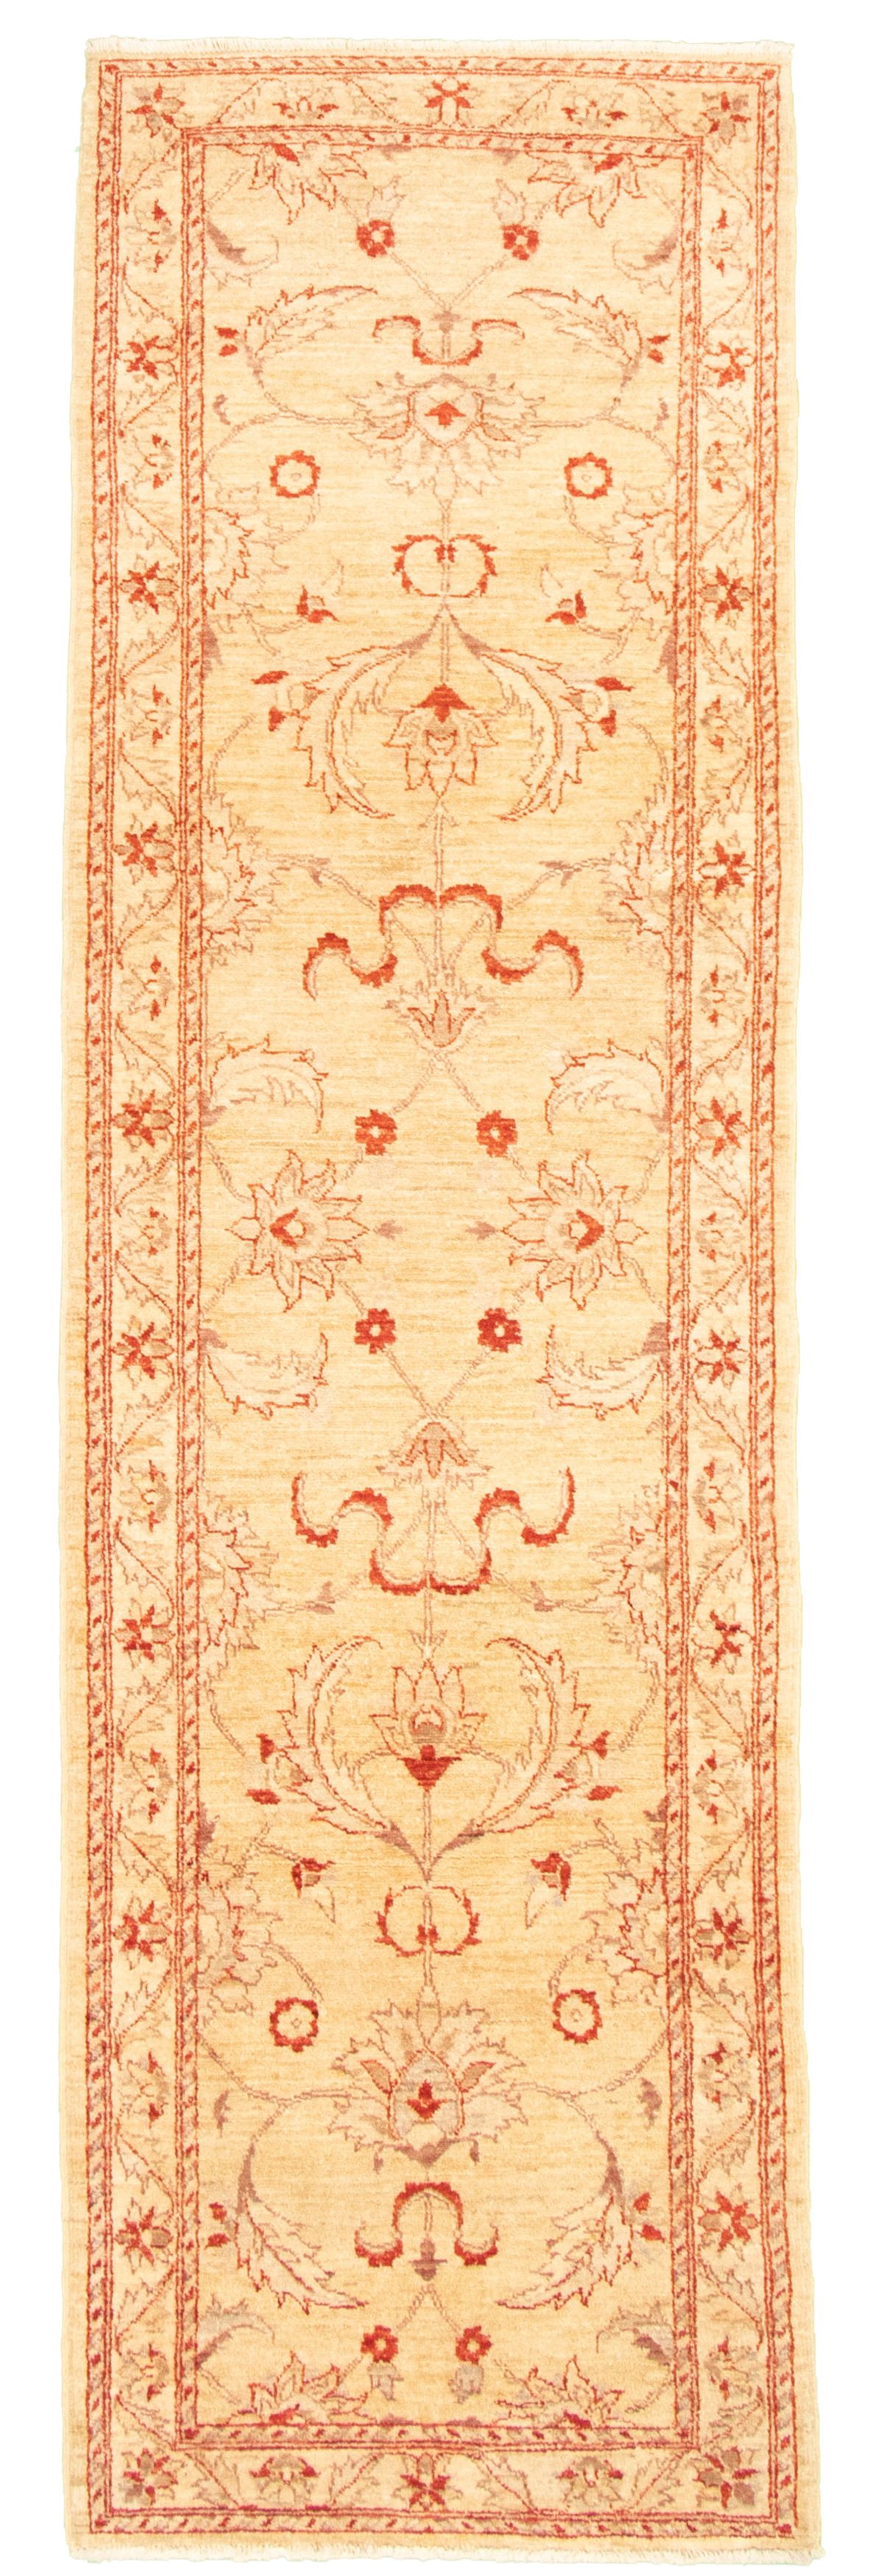 Hand-knotted Chobi Finest Light Khaki Wool Rug 2'8" x 9'6" Size: 2'8" x 9'6"  